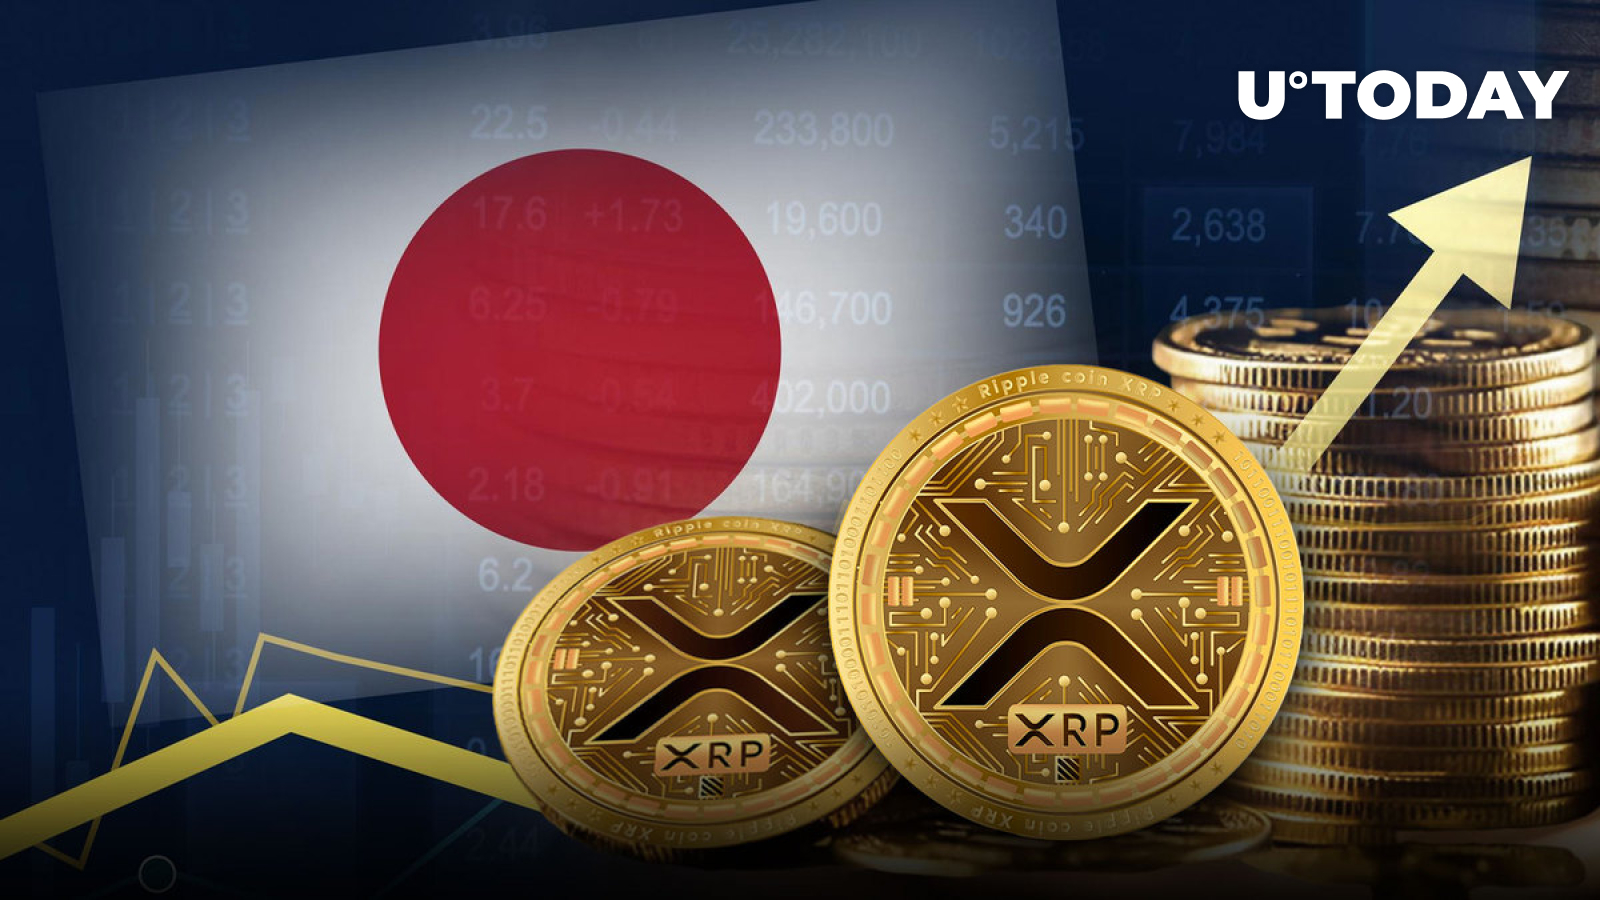 XRP’s Main Partner in Japan Highlights XRP Price Progress